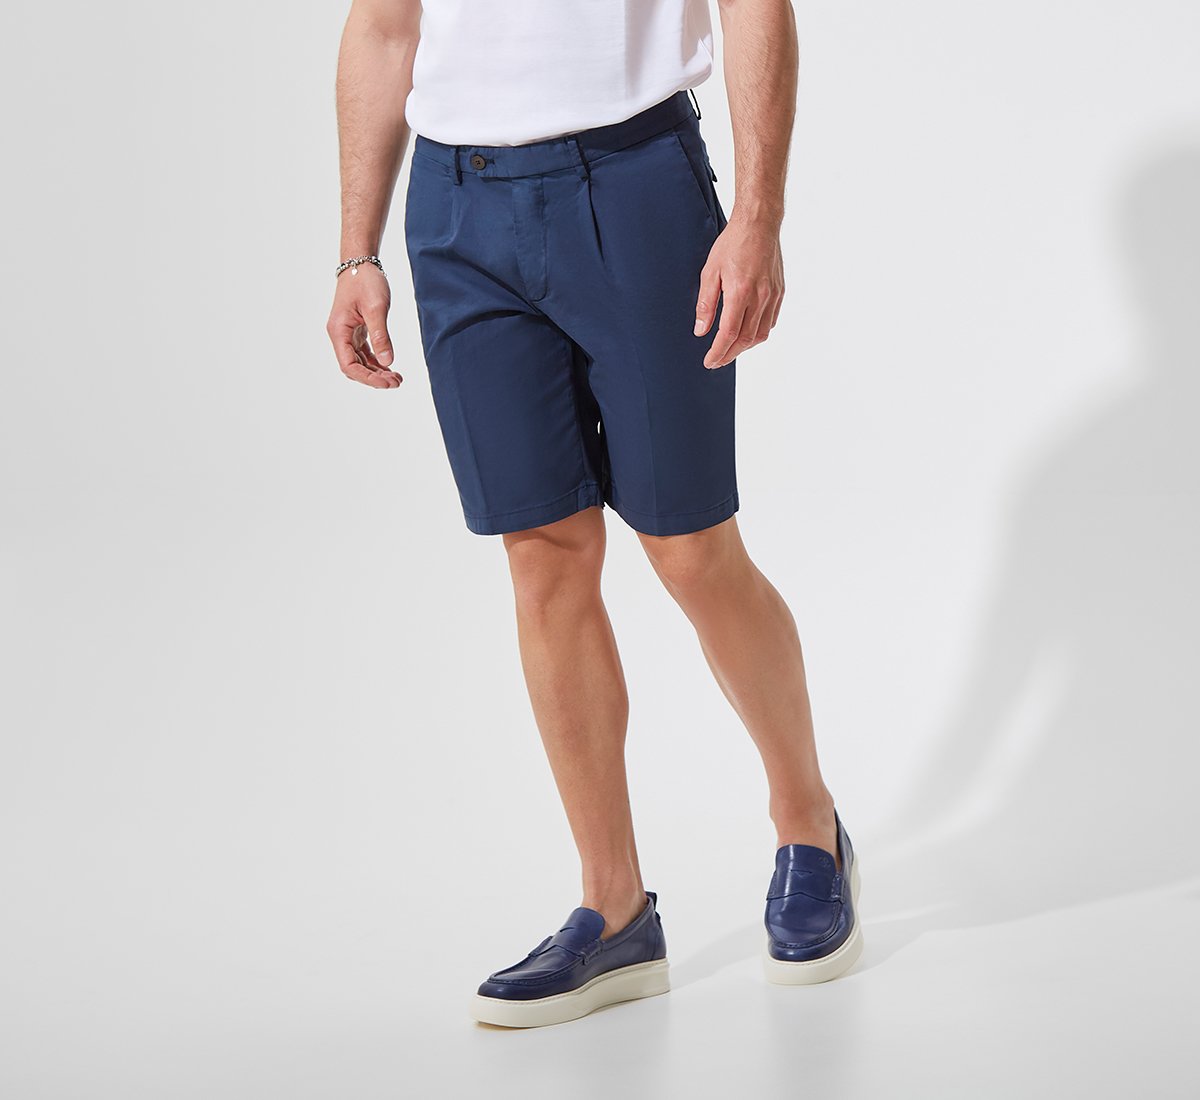 Structured Bermuda shorts